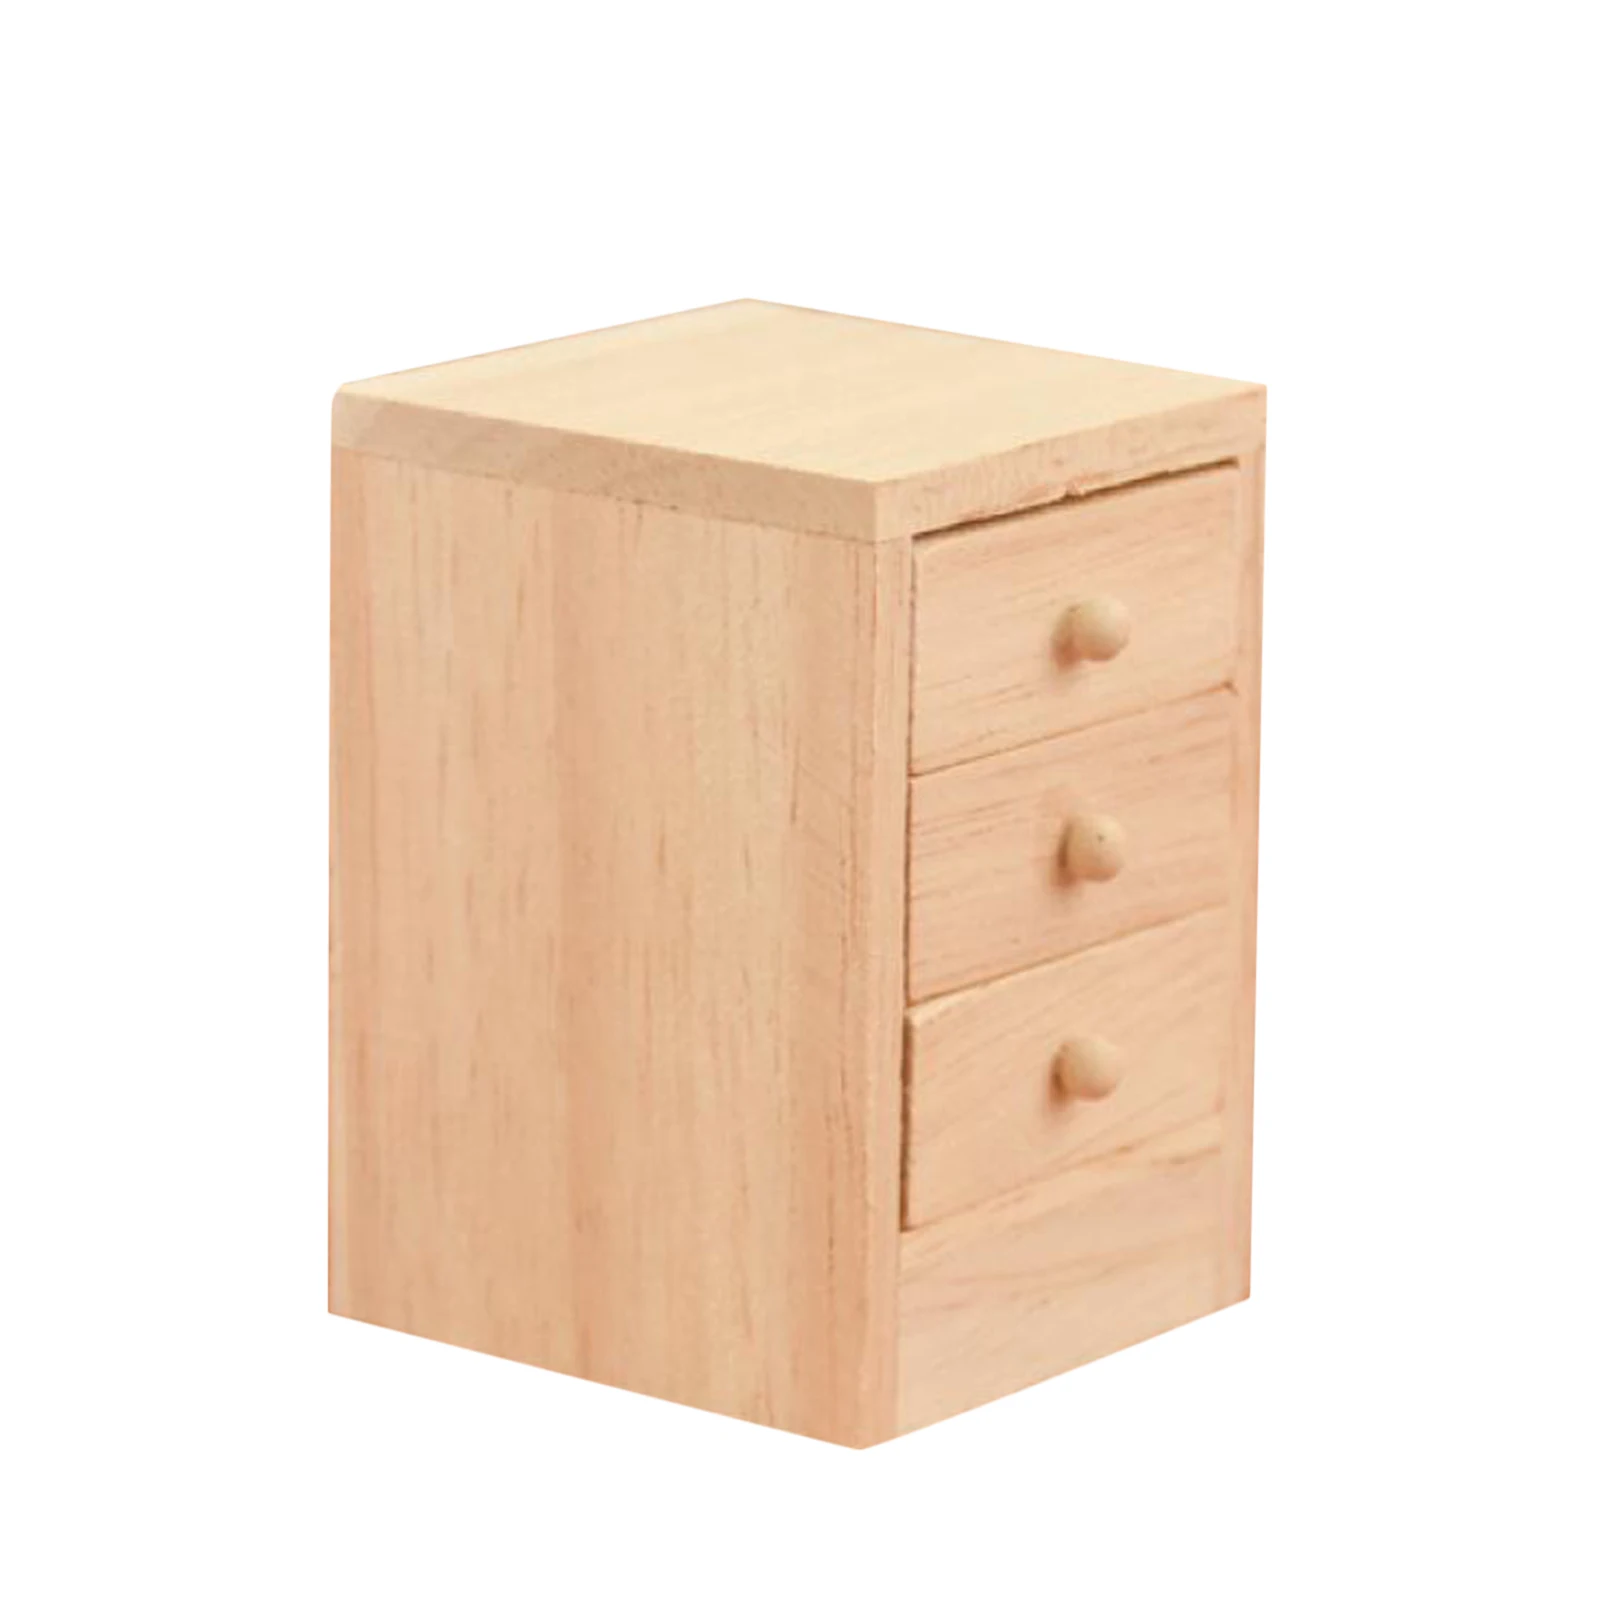 1/12 mini wooden bedside table simulation bedroom furniture supplies landscape